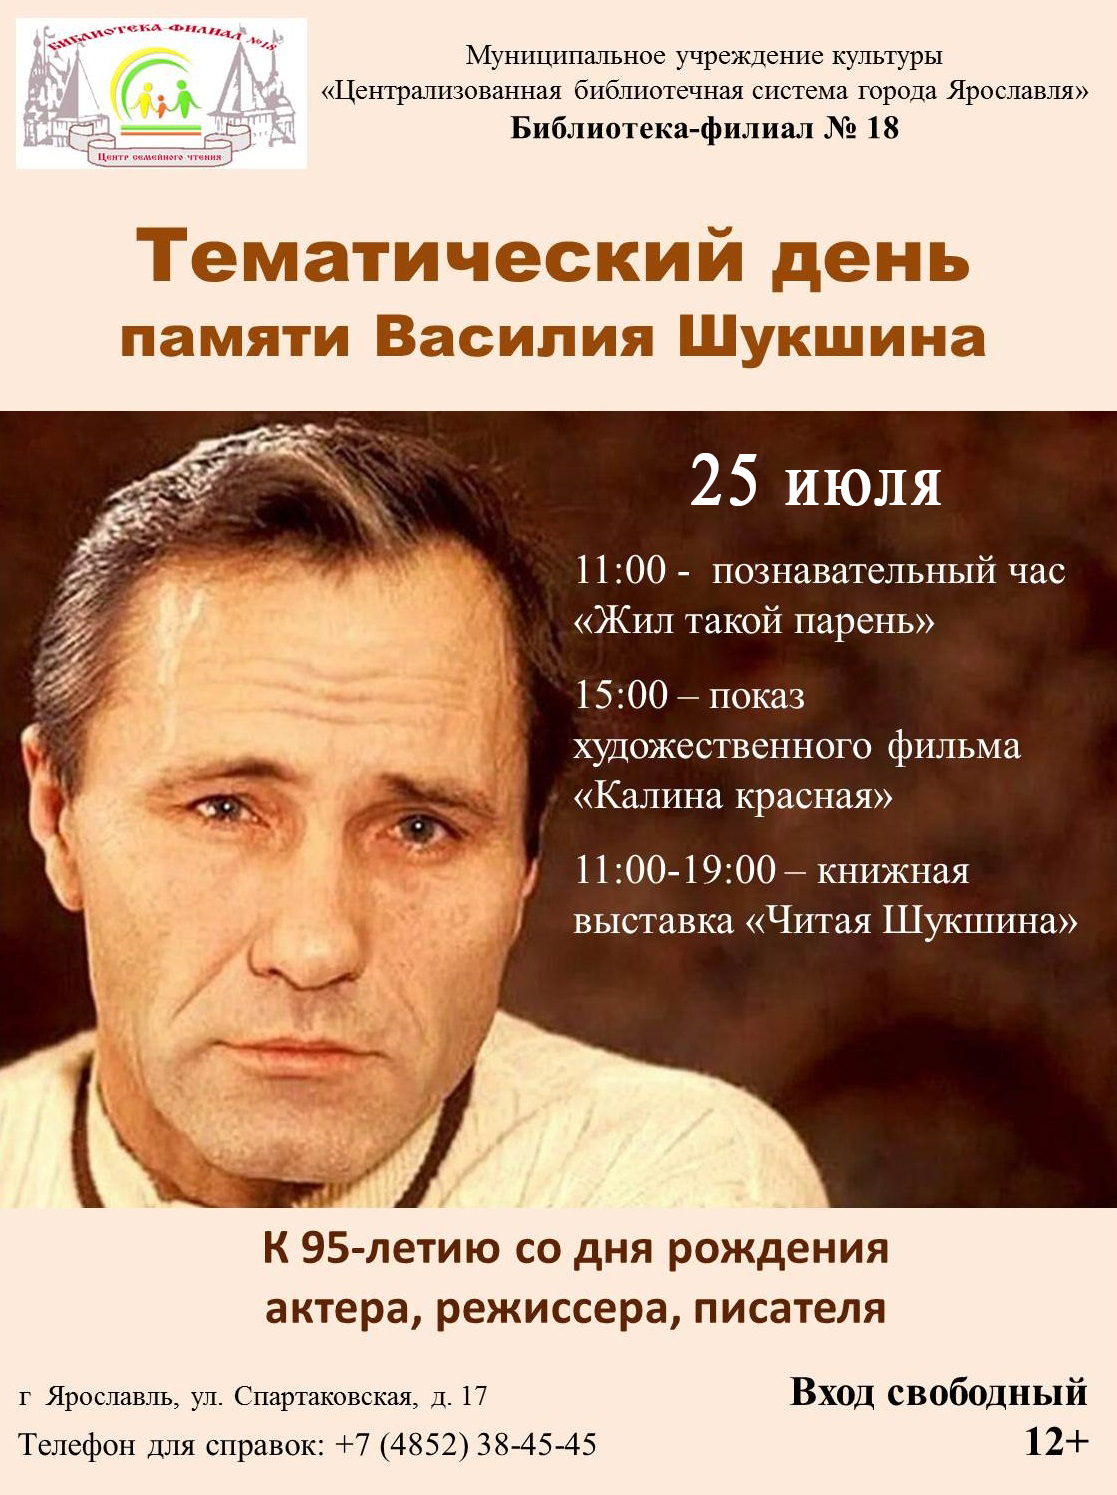 Тематический день памяти Василия Шукшина